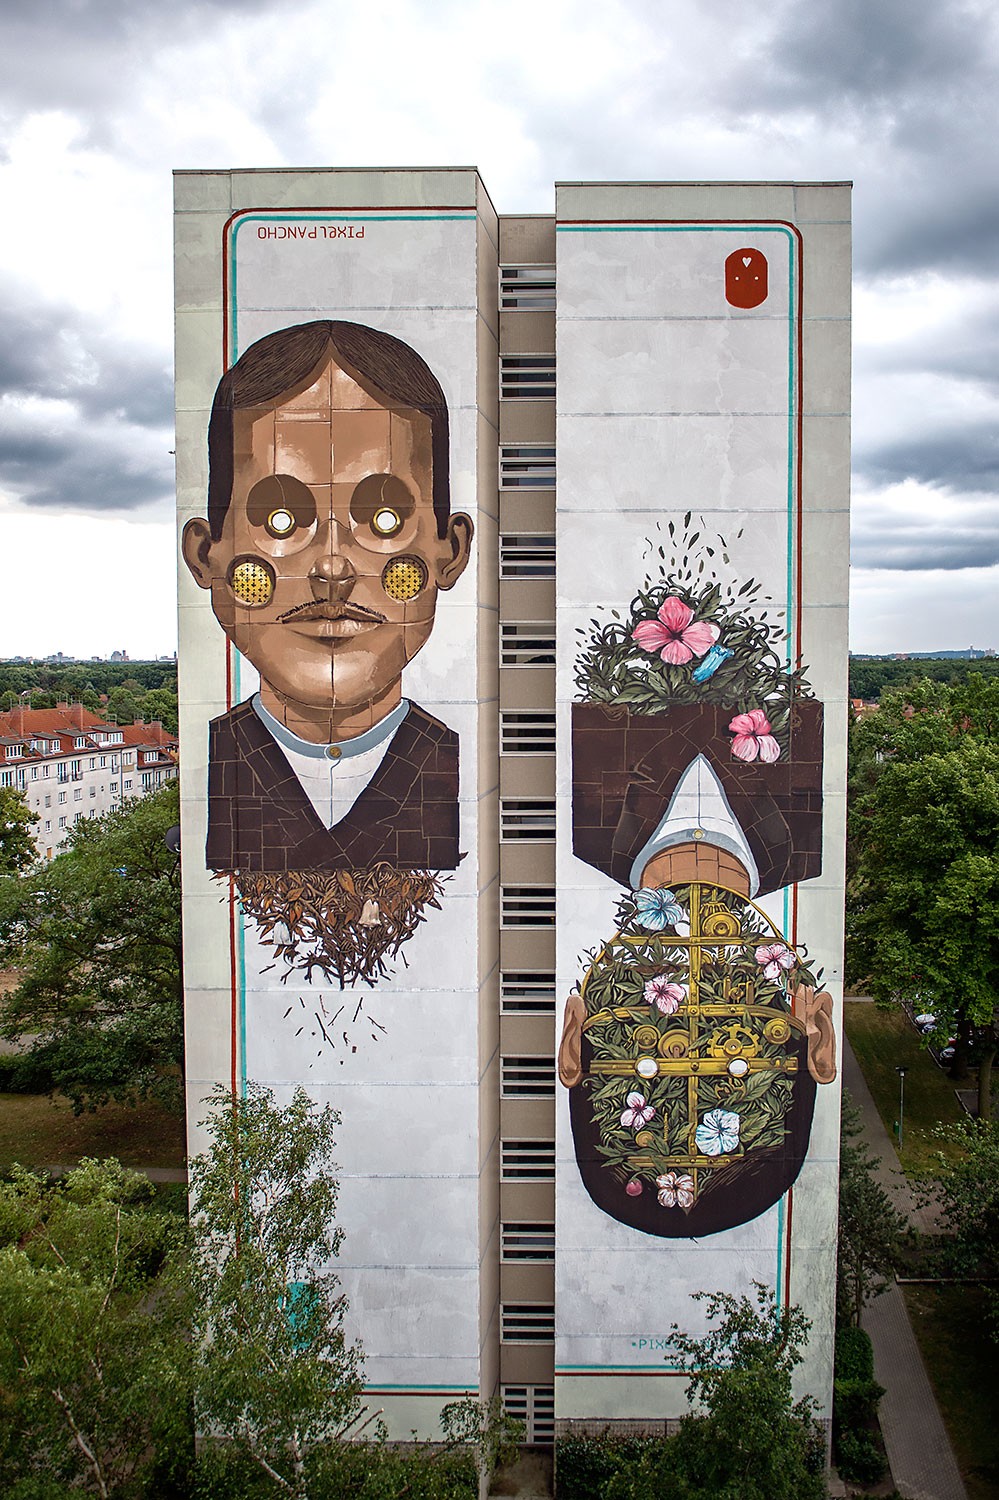 Italian artist Pixel Pancho paints a wall for Urban Nation "One Wall" series at Gewobag housing project at Neheimer Straße 13, in Berlin, Germany, in July 2016.   #OneWall #UrbanNation #UrbanNationBerlin #PixelPancho @PixelPancho   #MuseumofUrbanAndContemporaryArt #streetart   photo by Nika Kramer